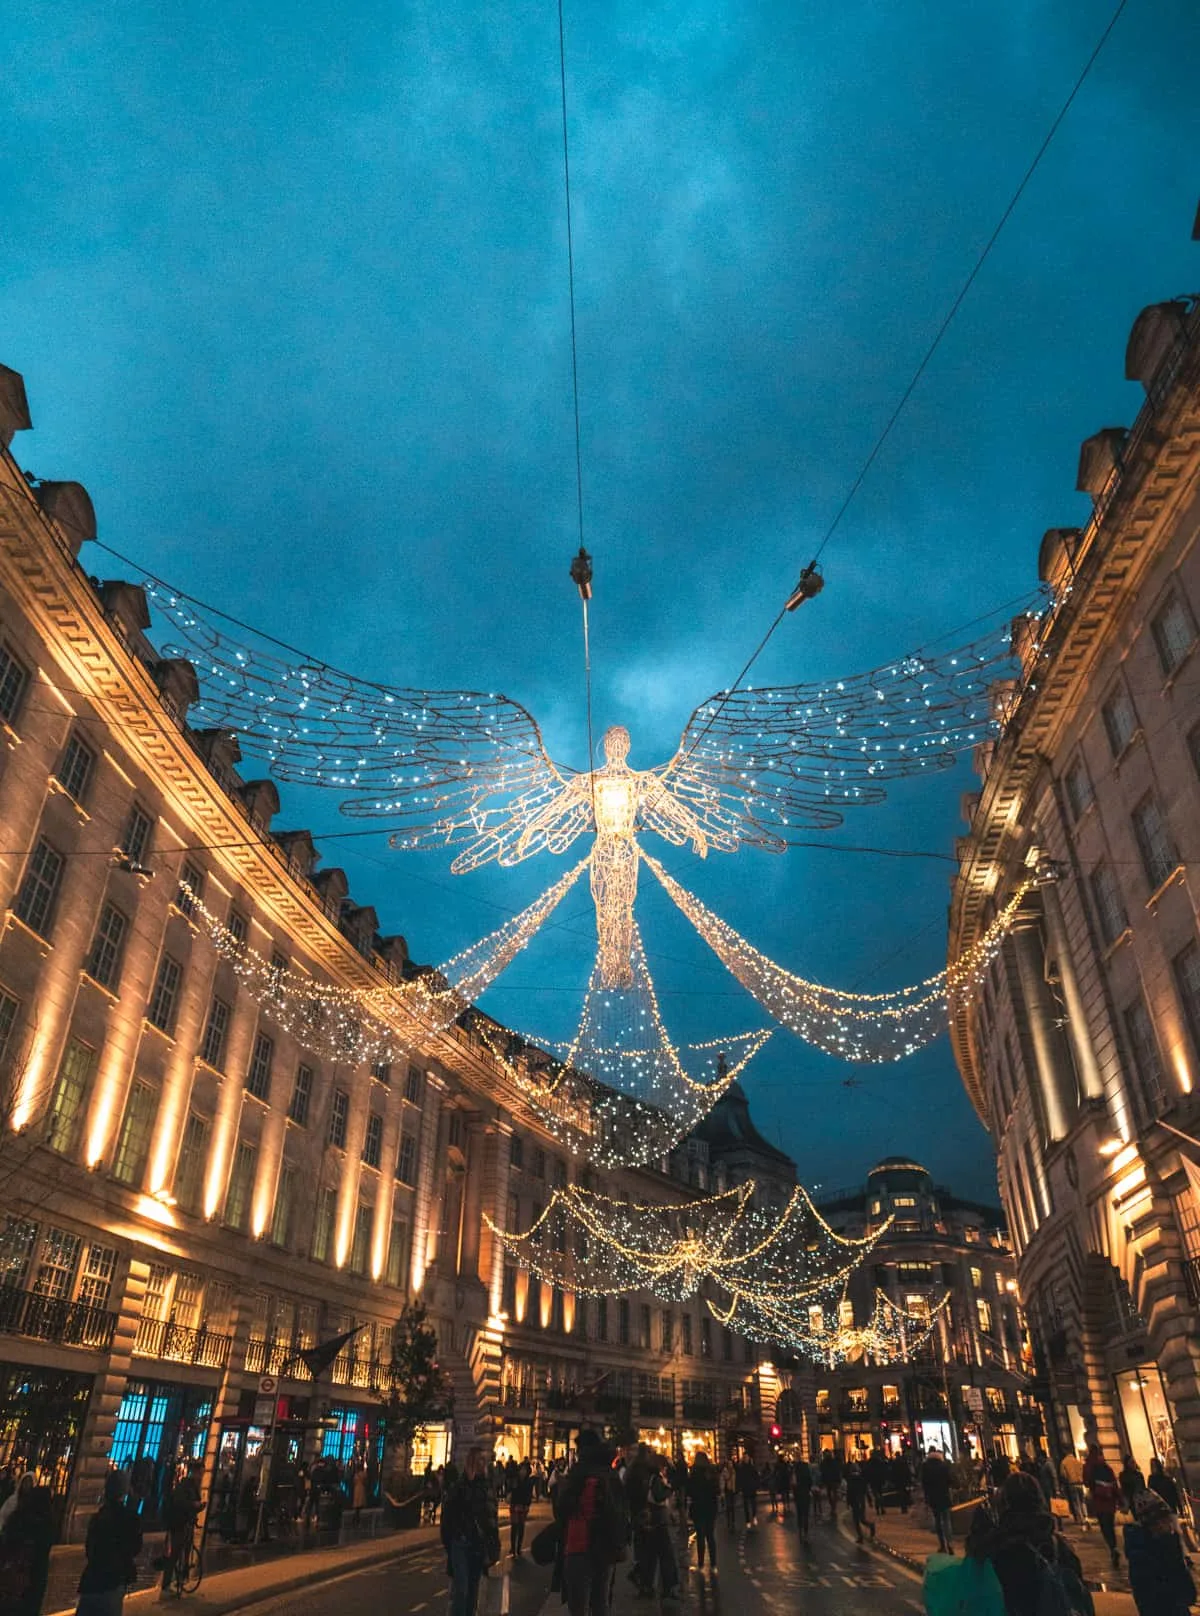 Angel lights on Regents Street with people walking by